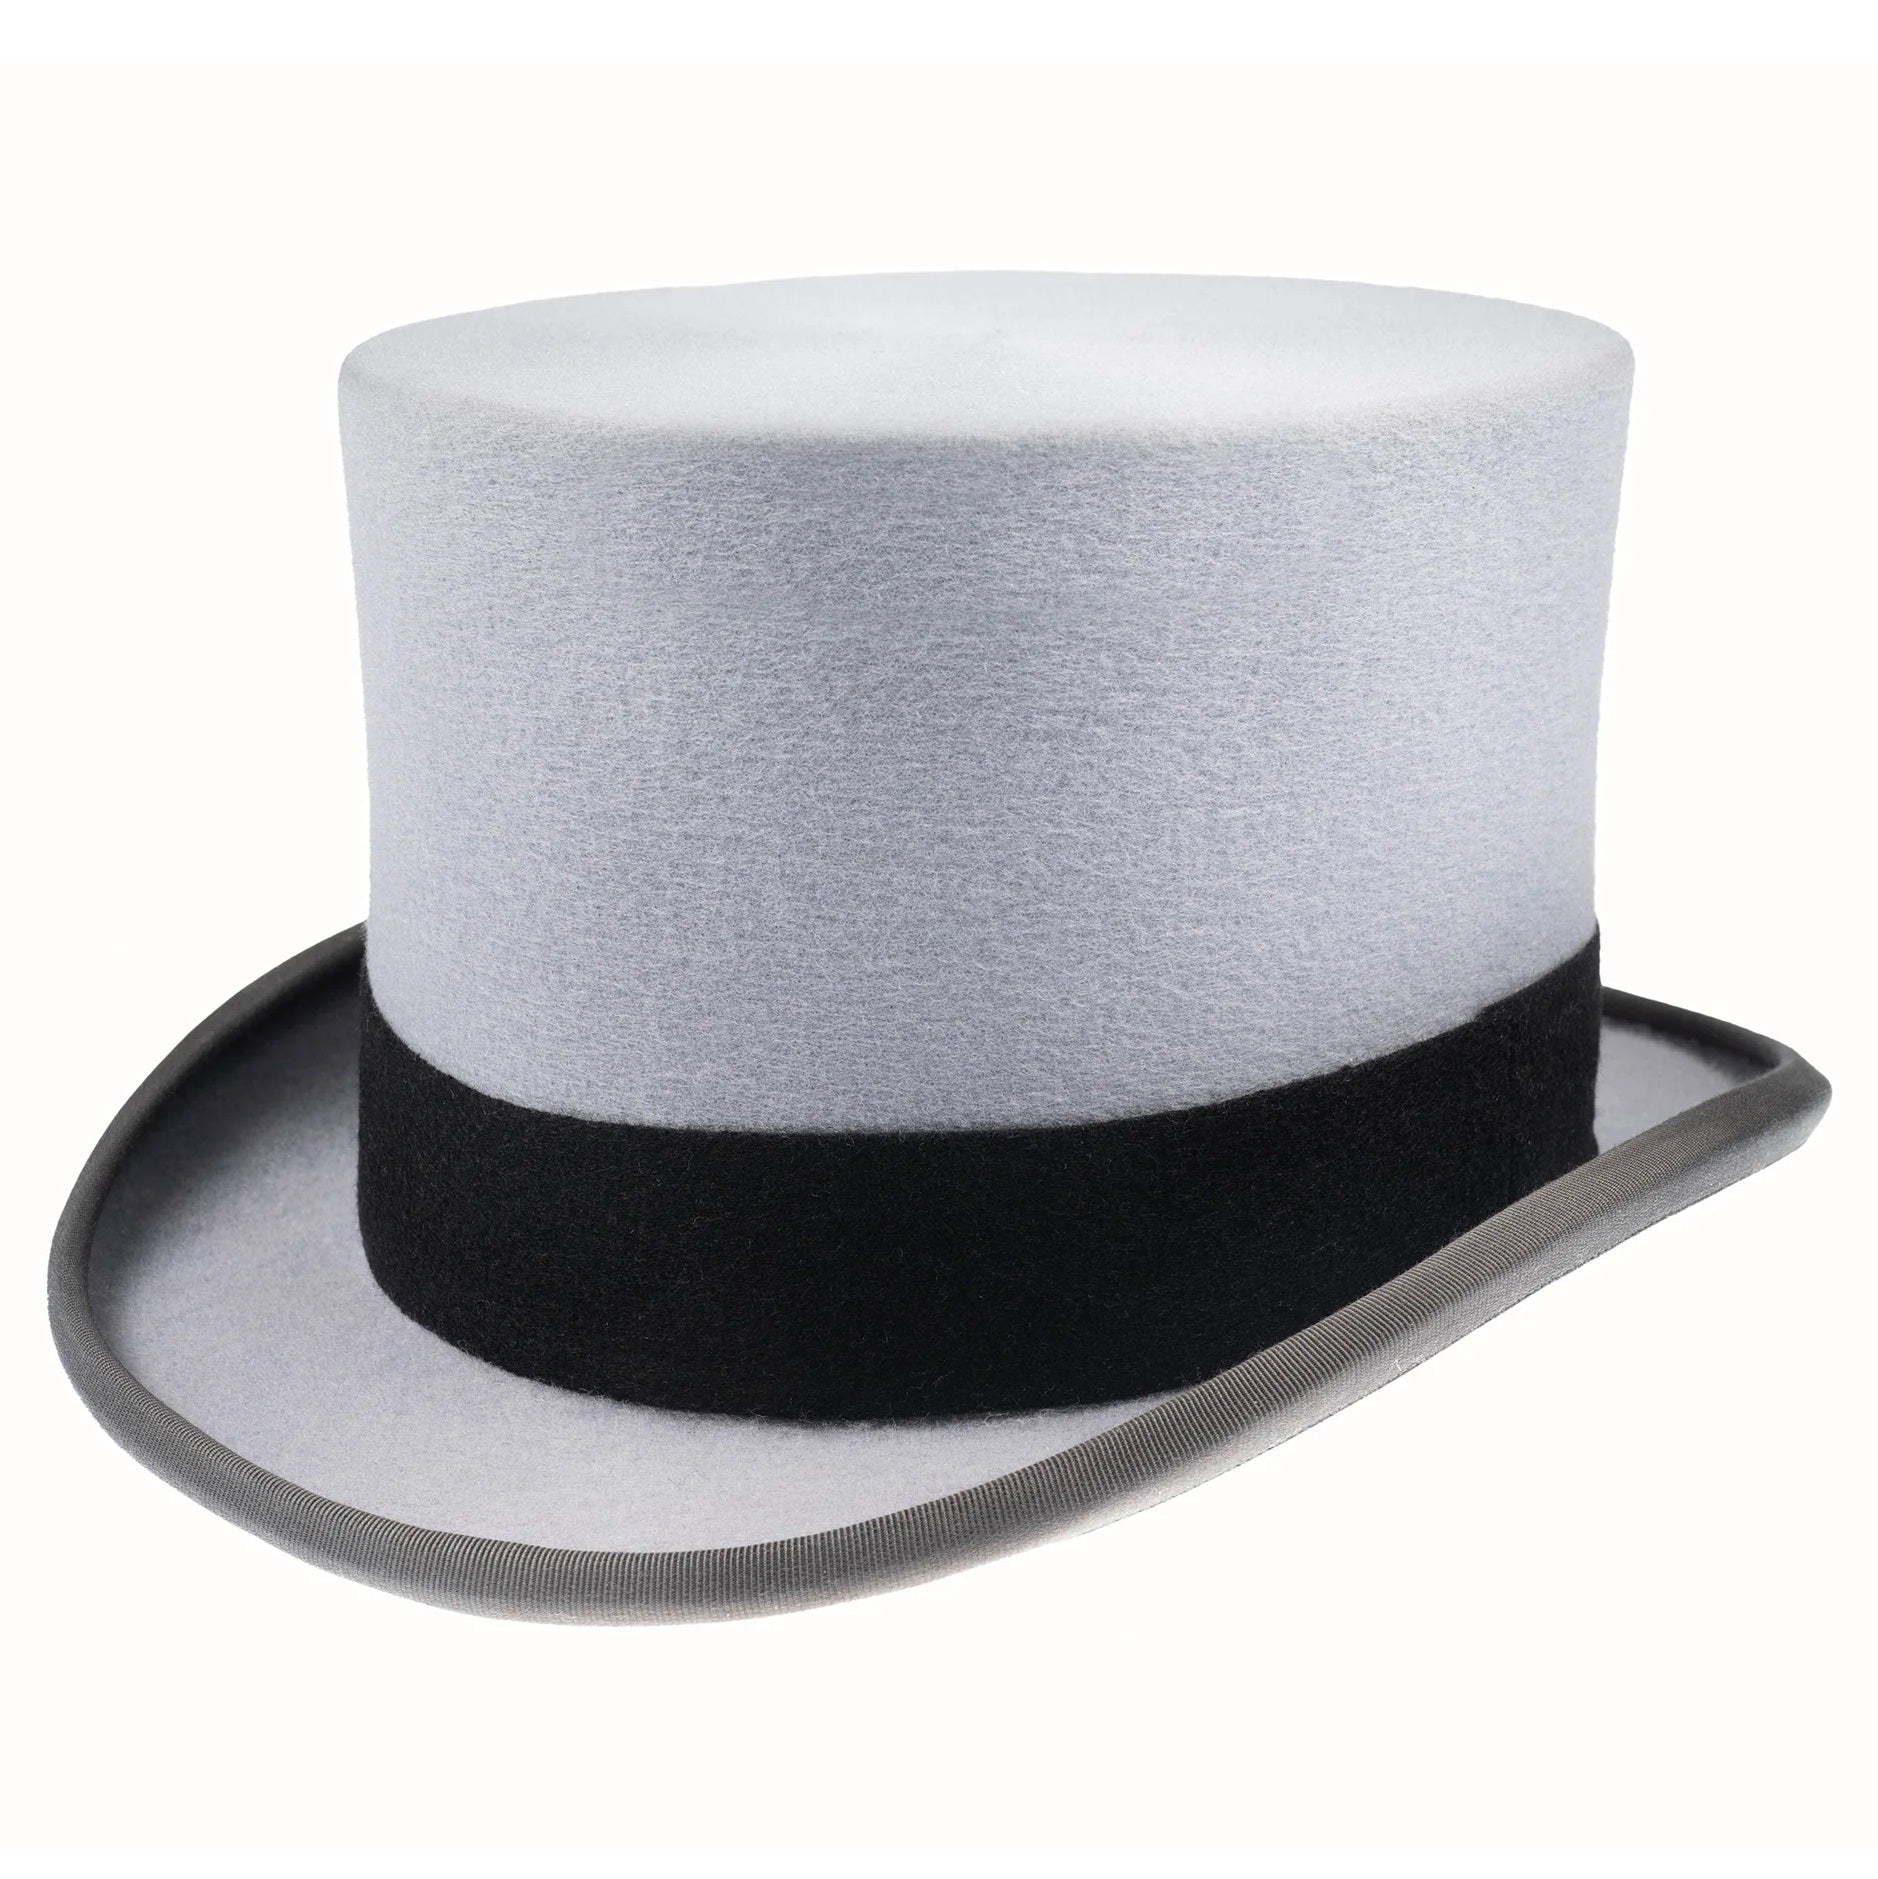 CHRISTYS' Wool Felt Top Hat - Grey